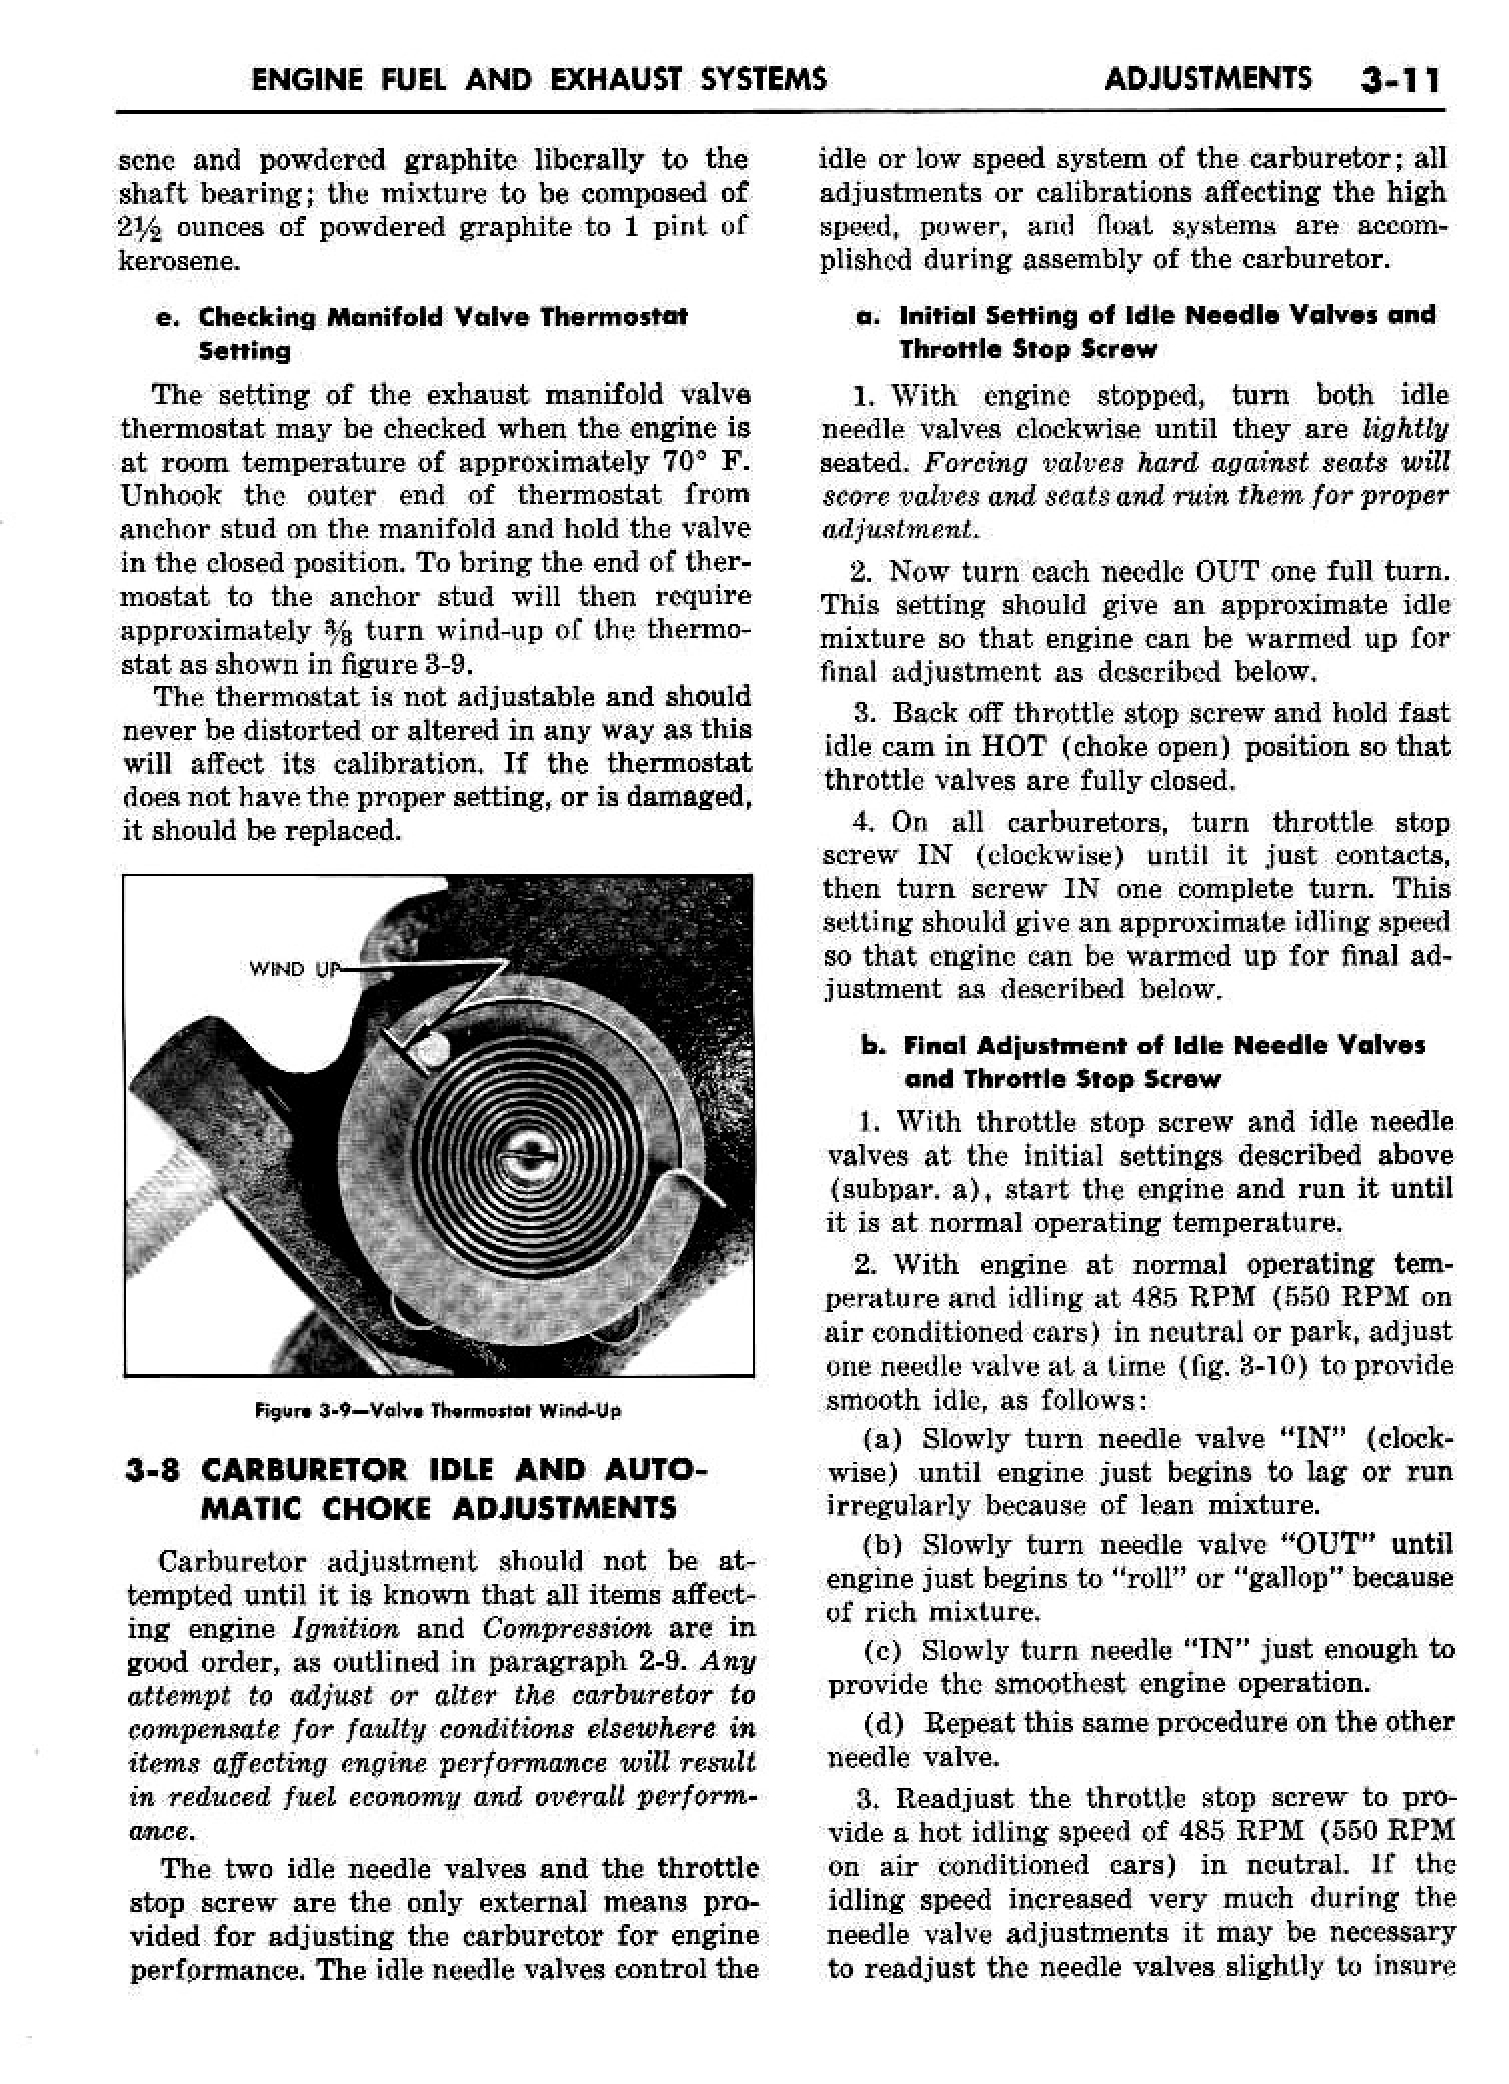 n_04 1958 Buick Shop Manual - Engine Fuel & Exhaust_11.jpg